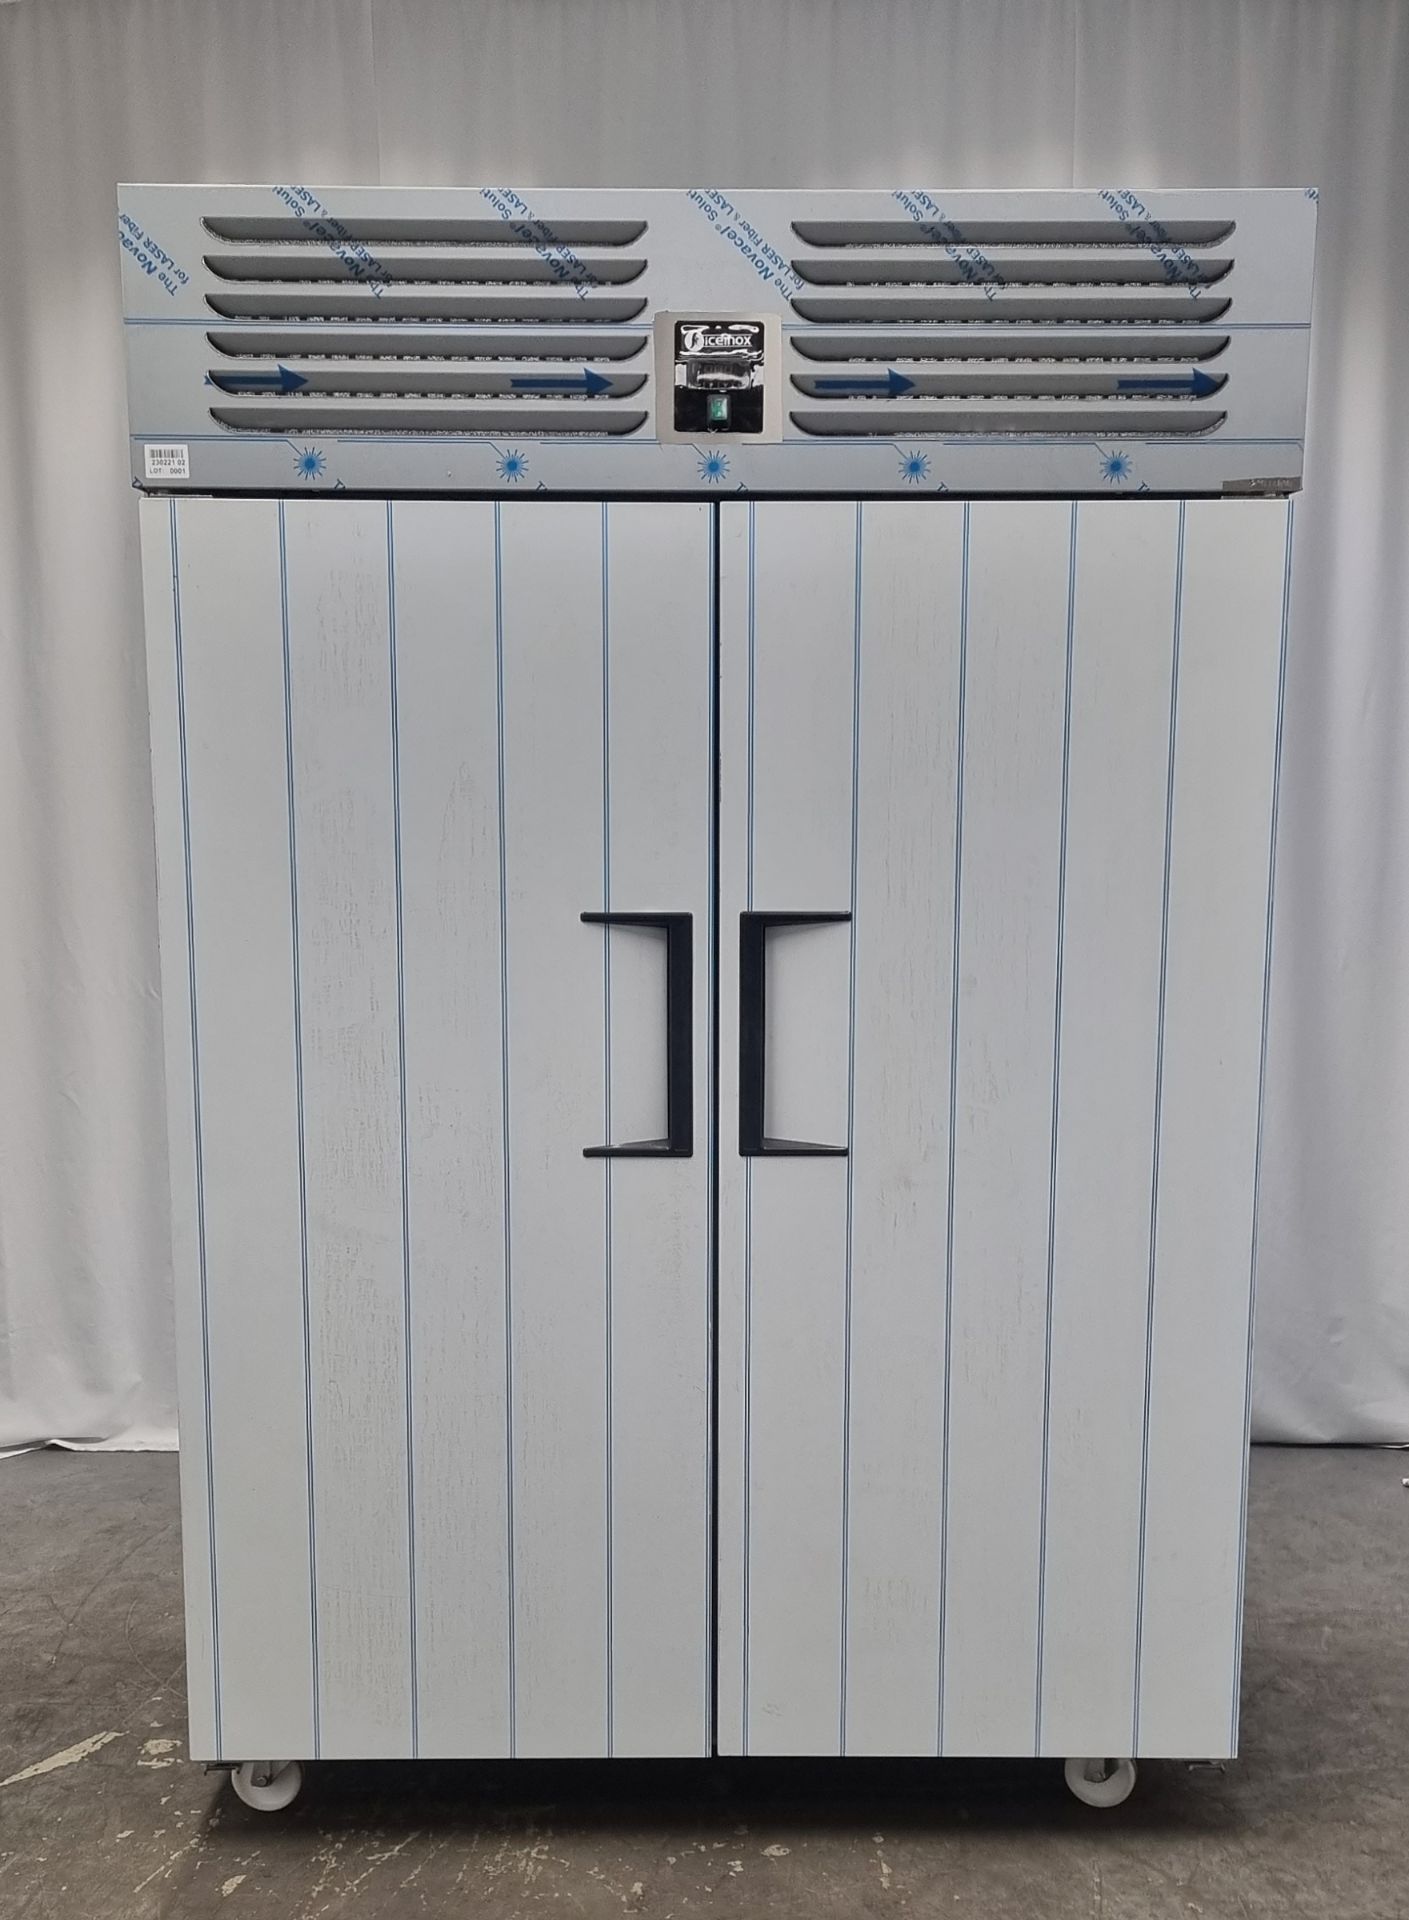 Iceinox VTS 1340 CR stainless steel upright, double door refrigerator